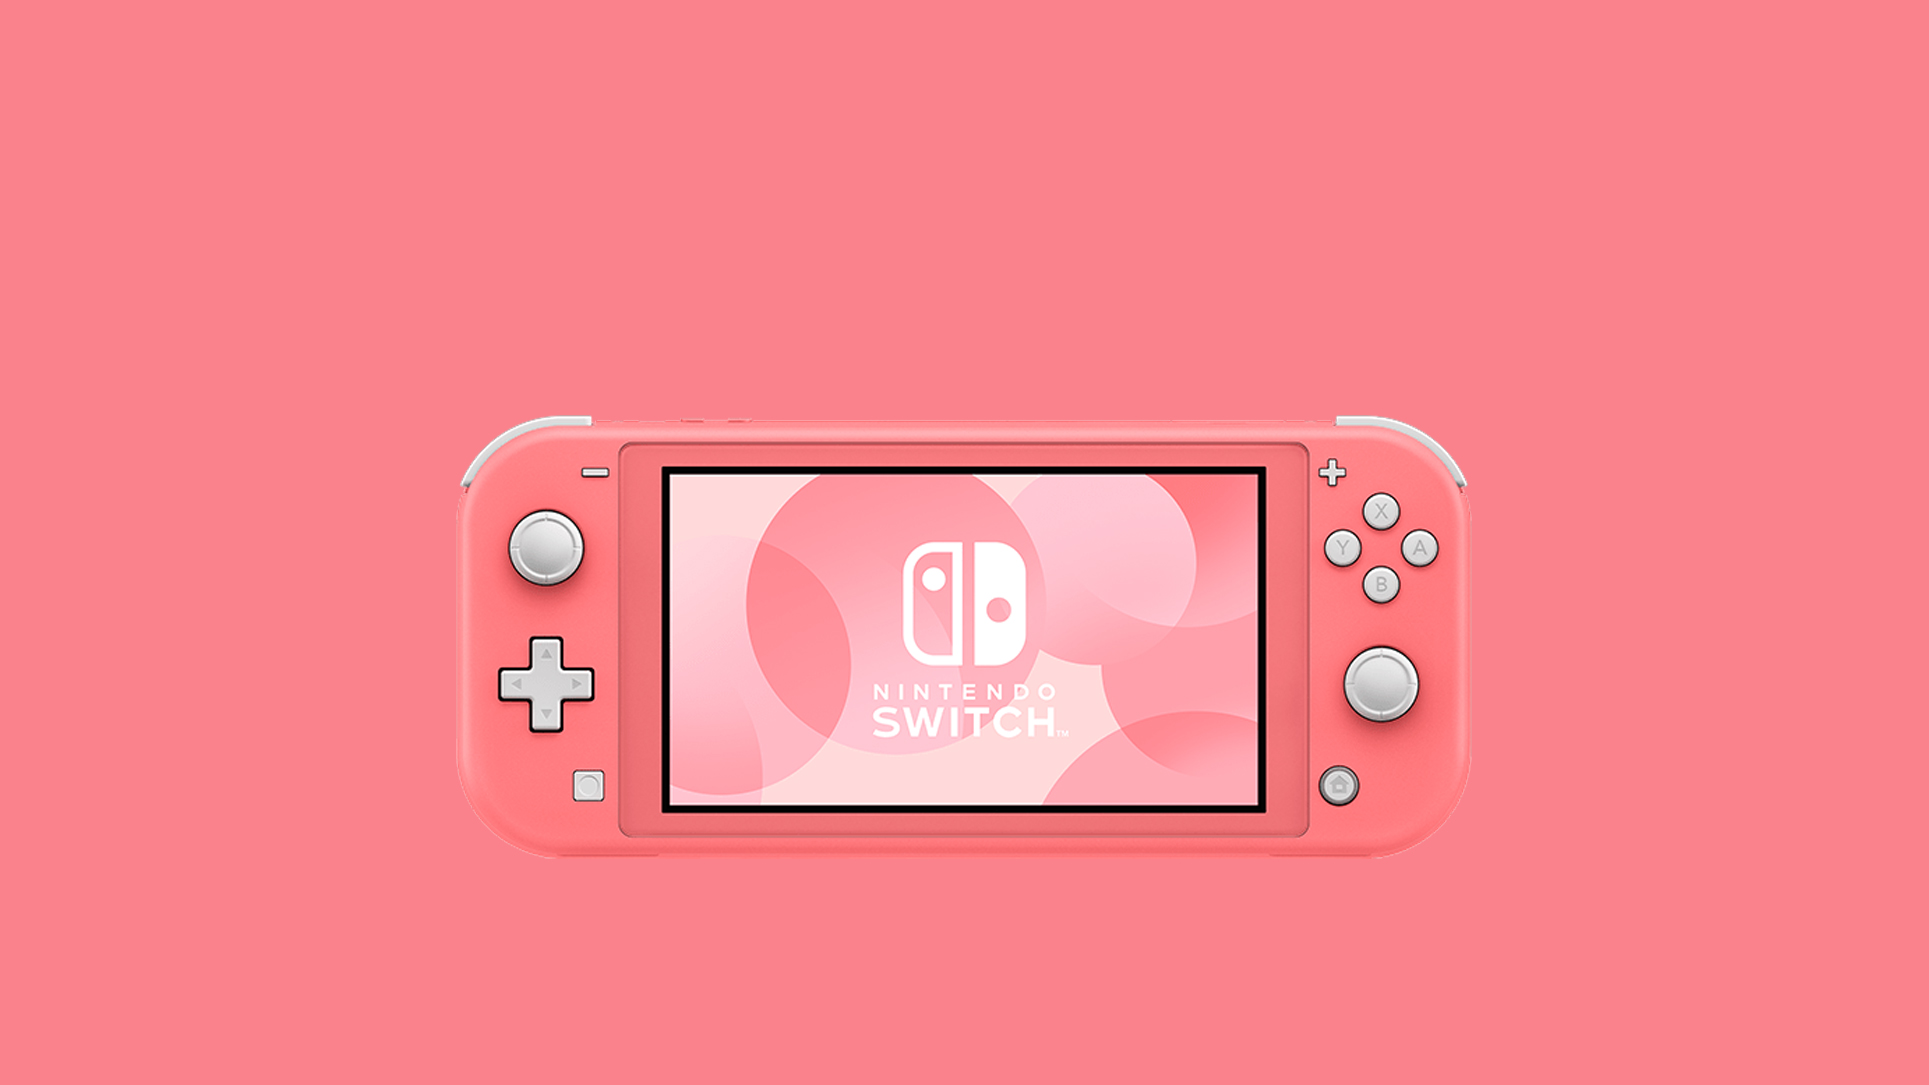 Nintendo switch little. Нинтендо свитч Лайт. Нинтендо свитч Лайт коралловый. Игровая приставка Nintendo Switch Lite Coral. Nintendo Switch Lite Pink.